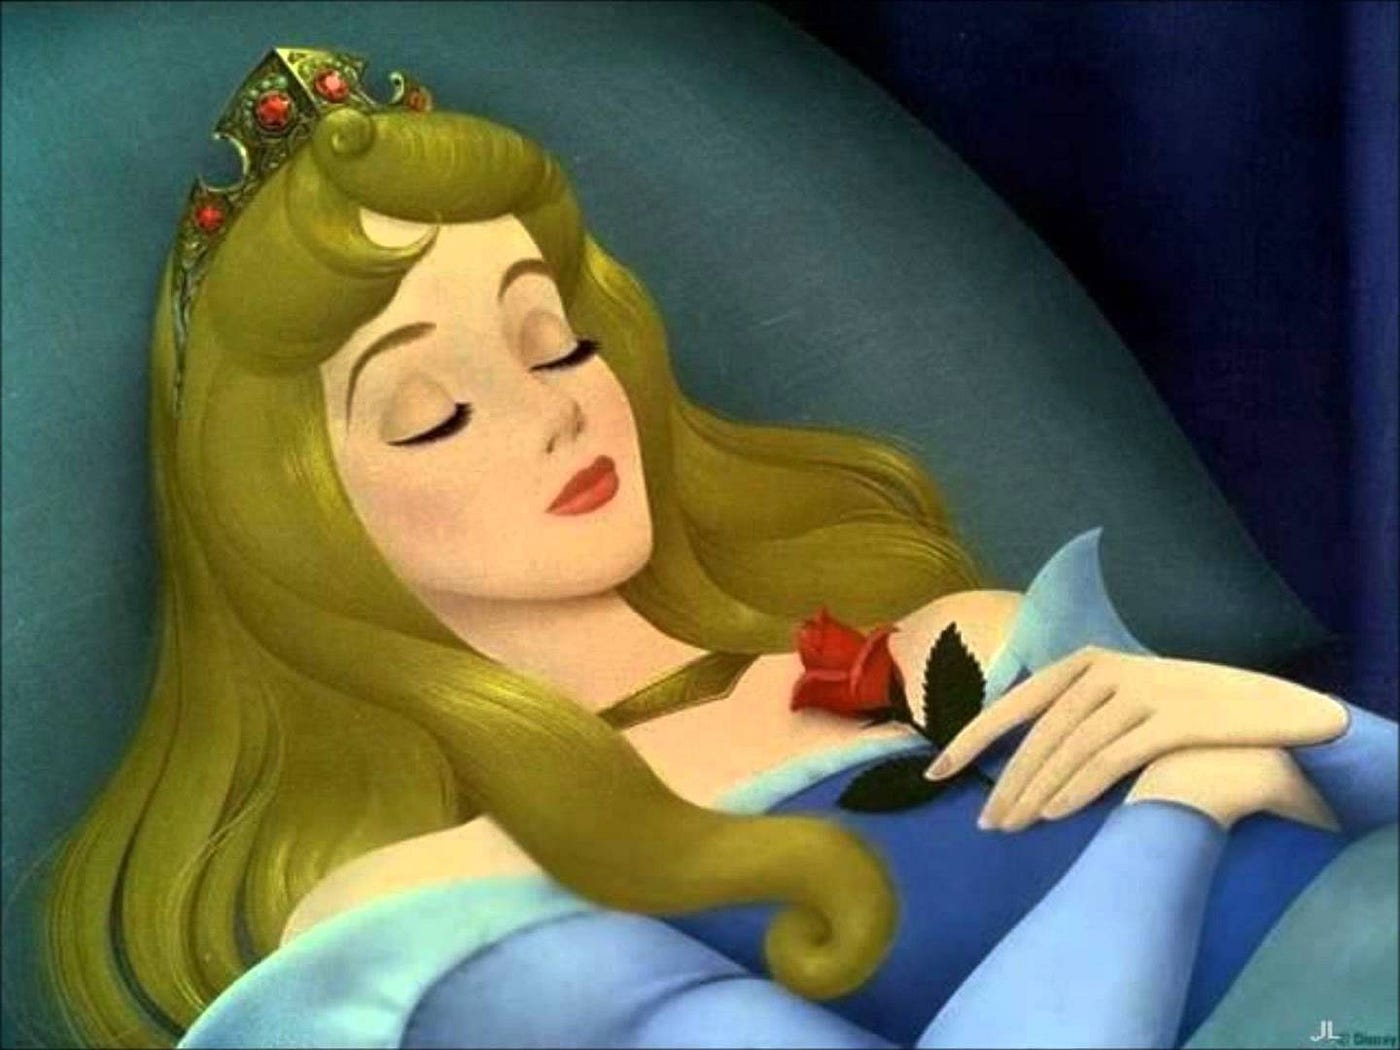 Aurora (A Bela Adormecida) — 1959, by Luiza Morato